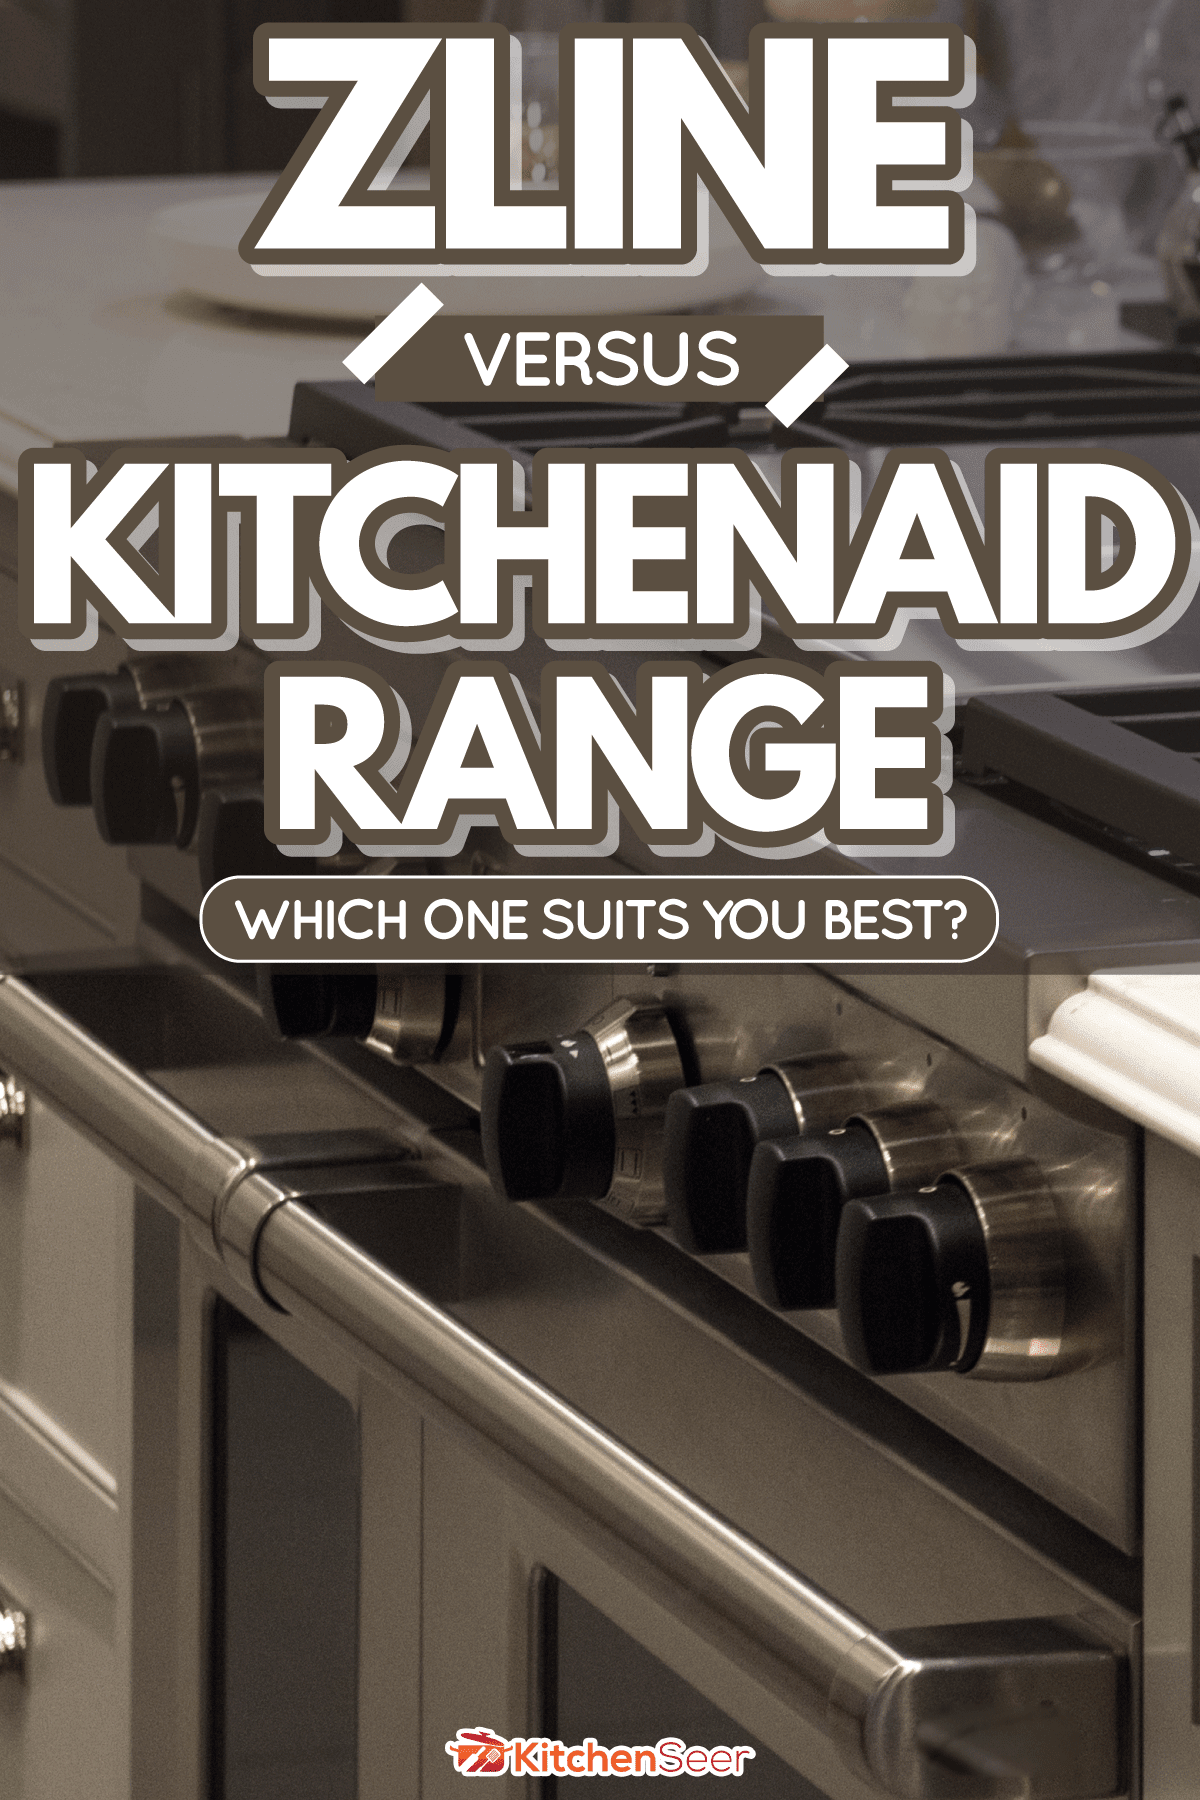 ZLINE-vs-KitchenAid-Range-Pros-Cons--Differences1